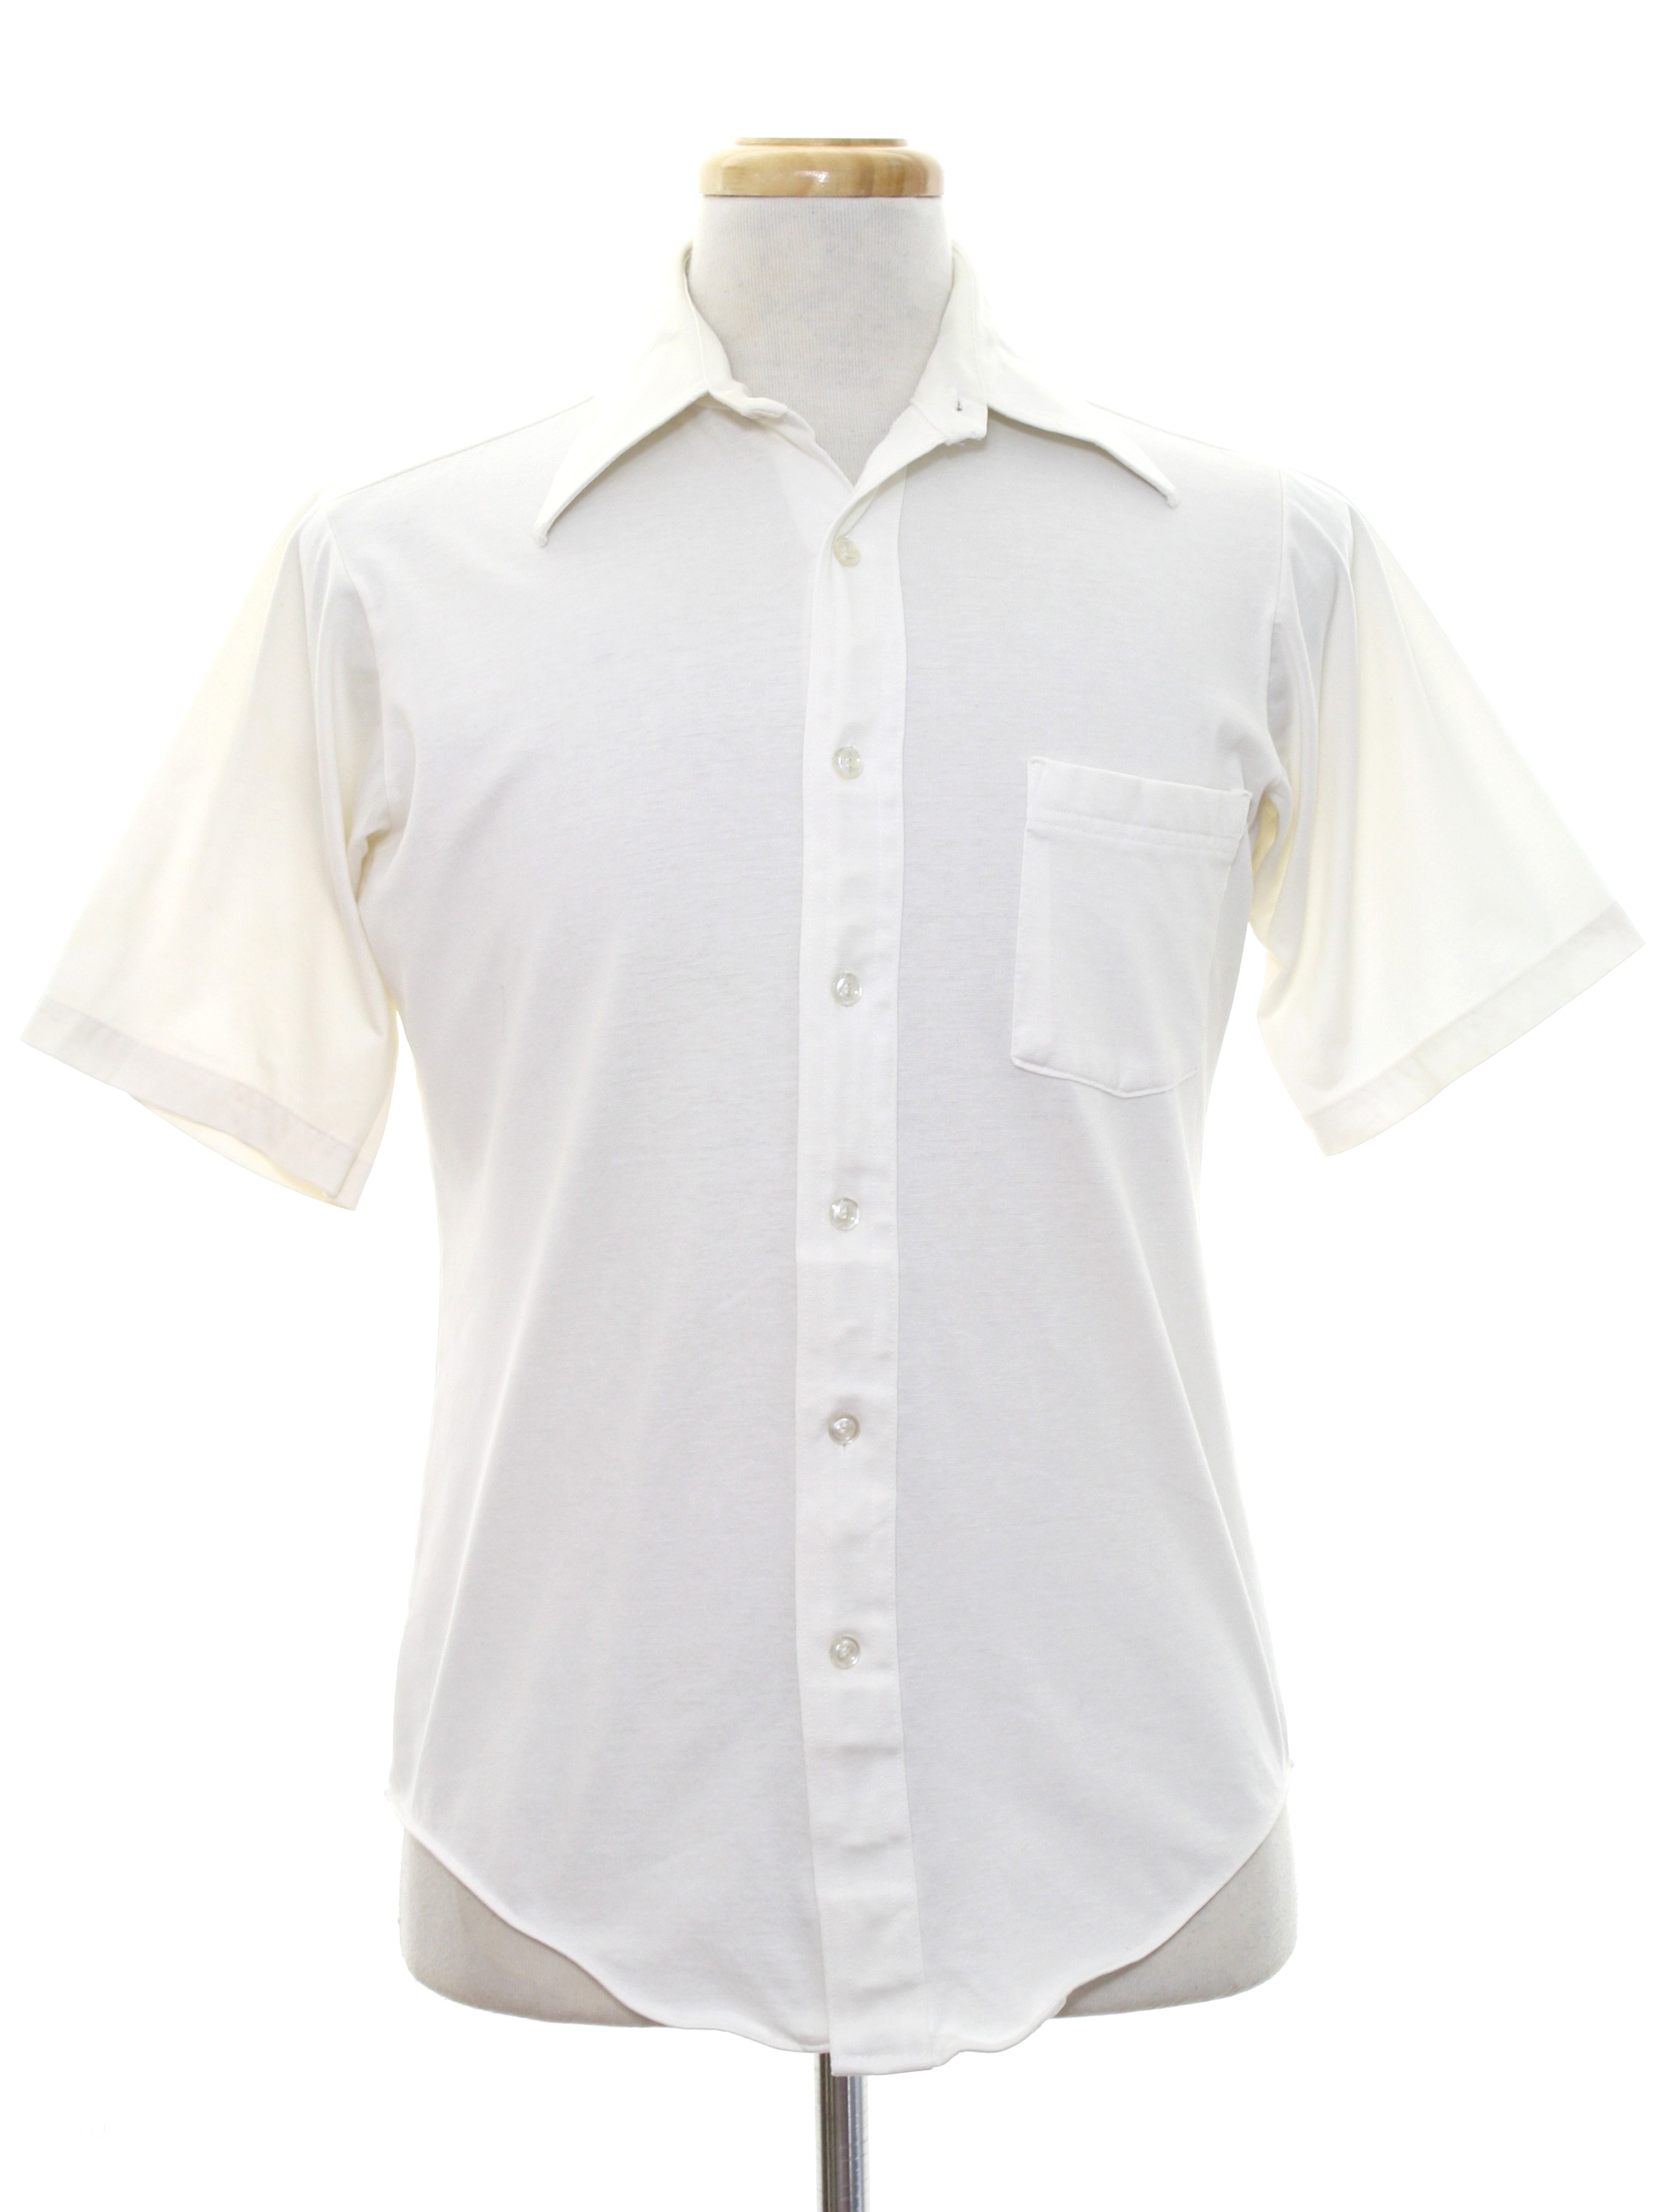 Retro Seventies T Shirt: 70s -JC Penney- Mens white cotton short sleeve ...